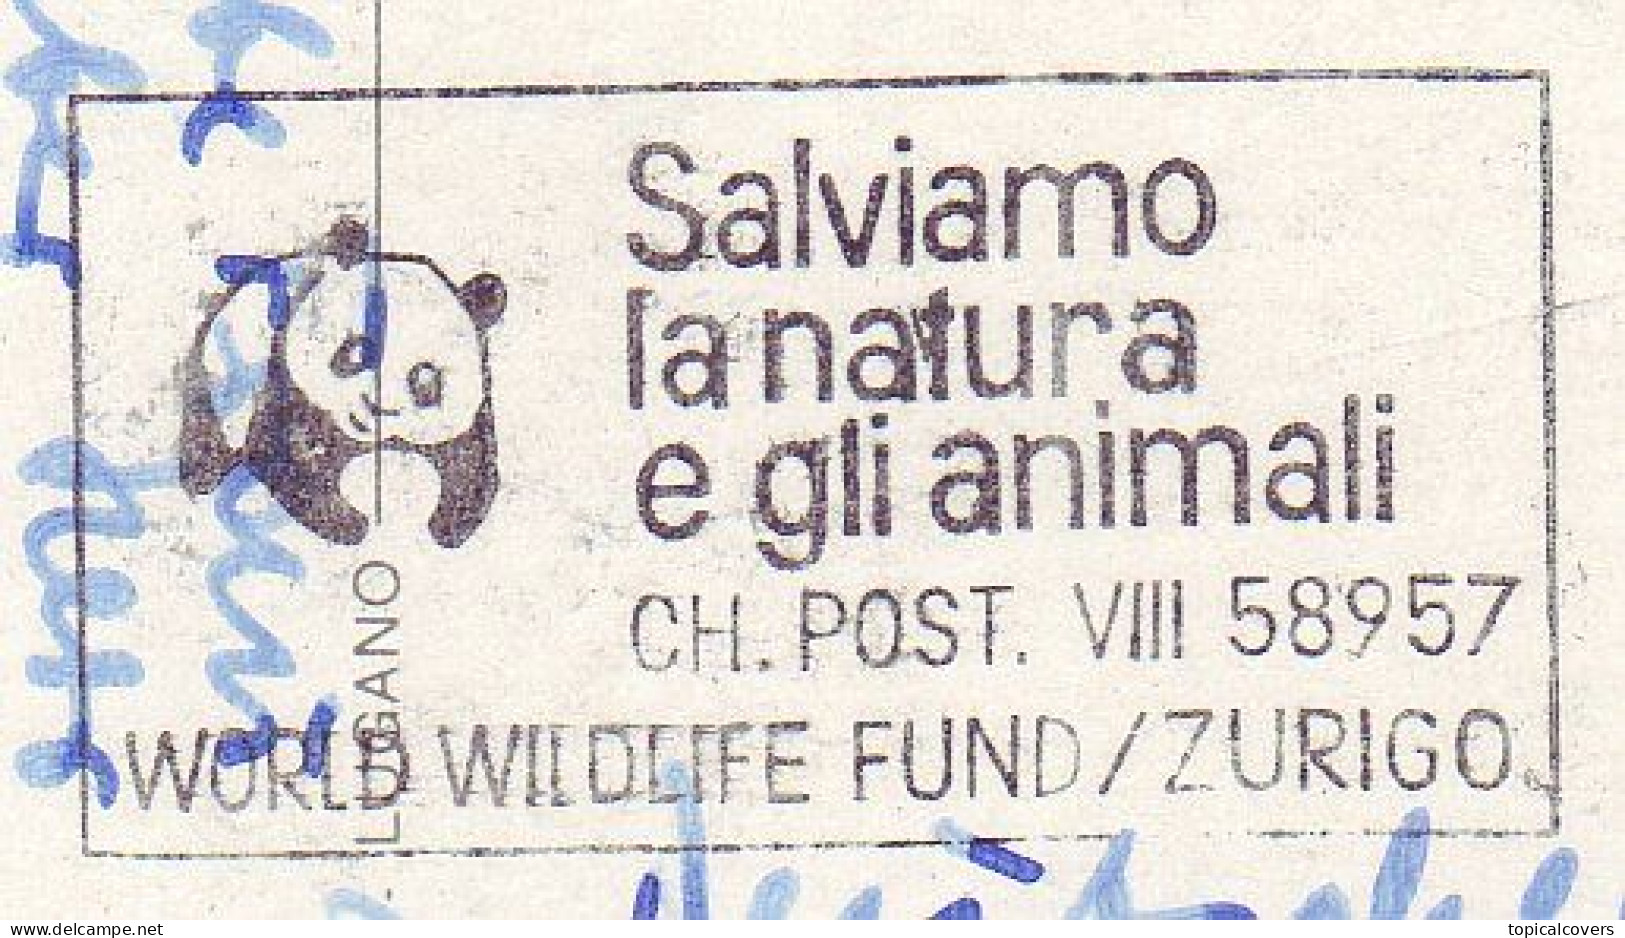 Postcard  / Postmark Switzerland 1964 - WWF - World Wildlife Fund - Panda Bear - Lettres & Documents